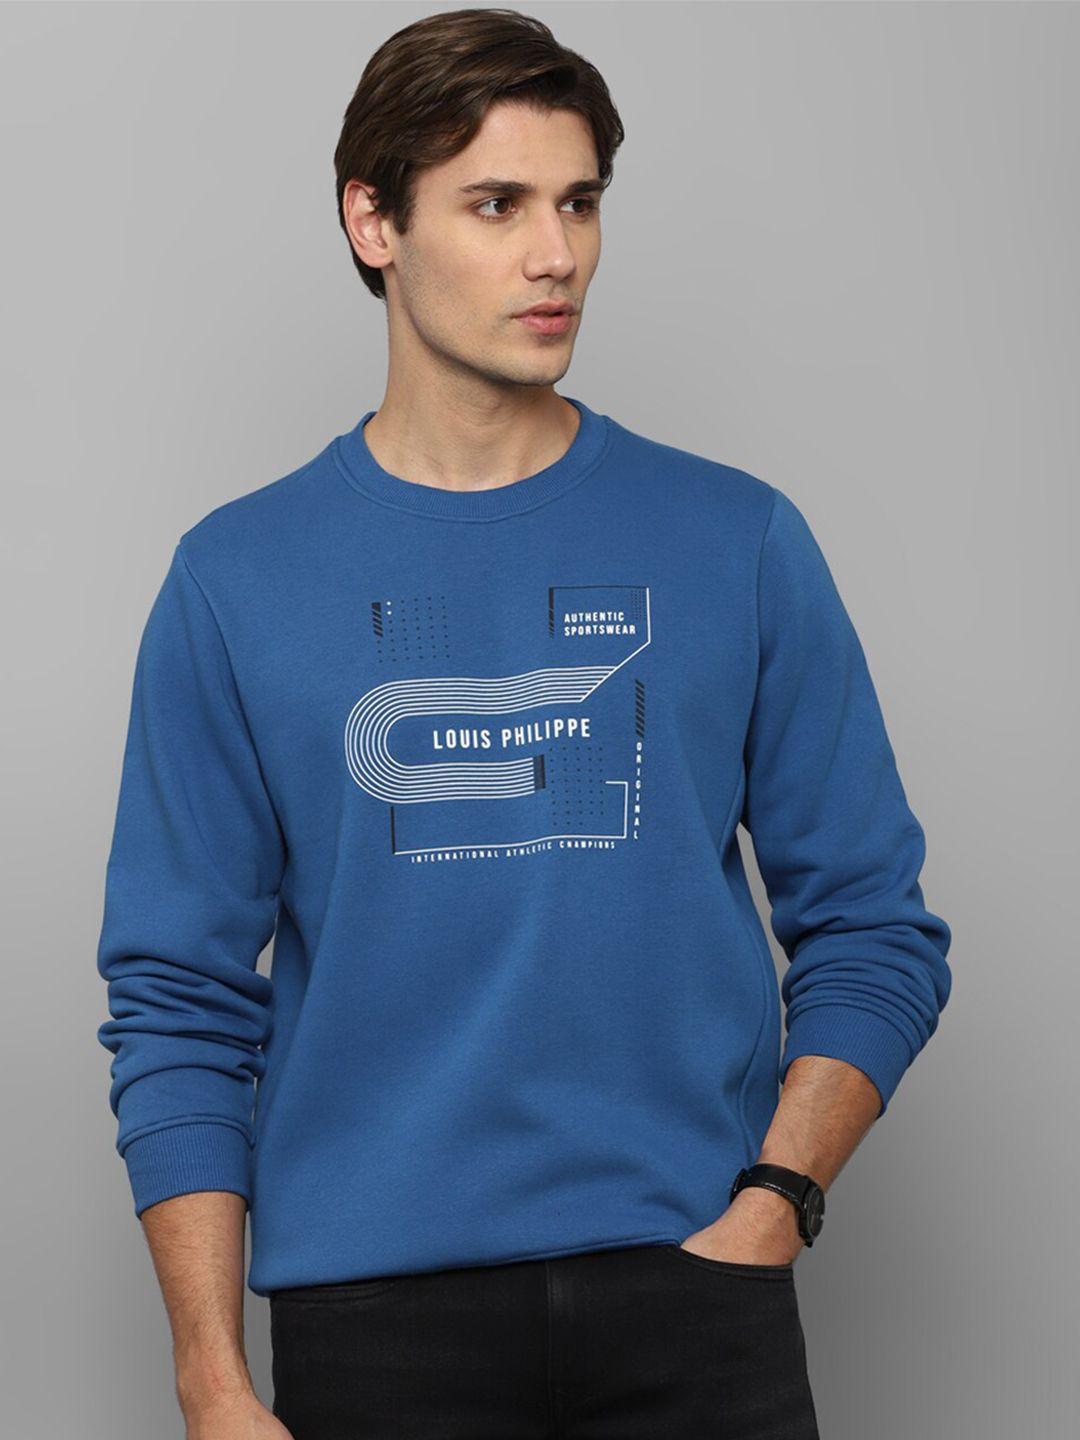 louis philippe sport men blue cotton printed sweatshirt